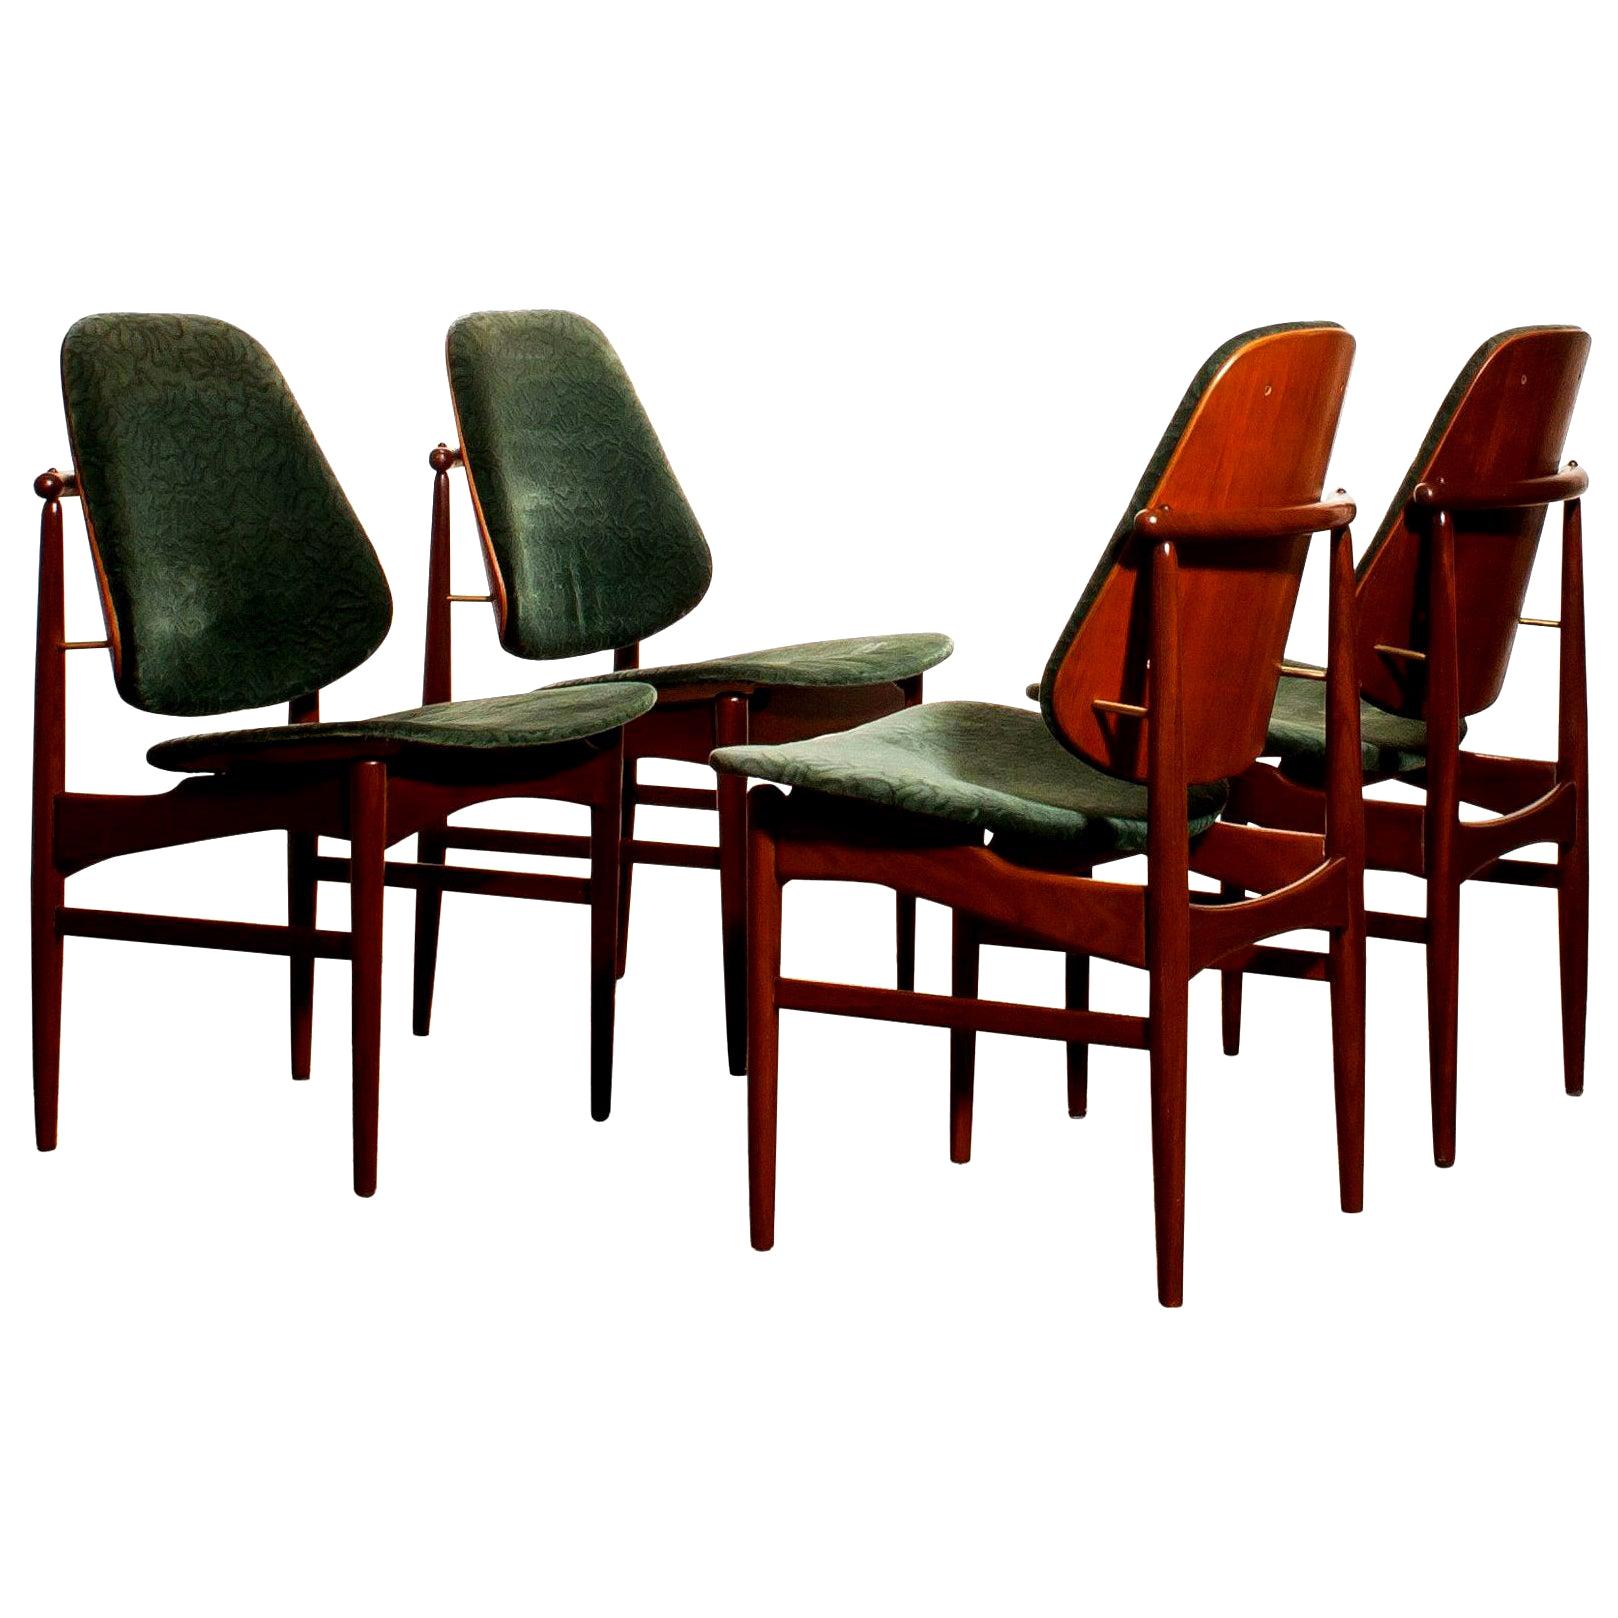 1950s, Set of Four Teak Dining Chairs by Arne Hovmand-Olsen & Jutex